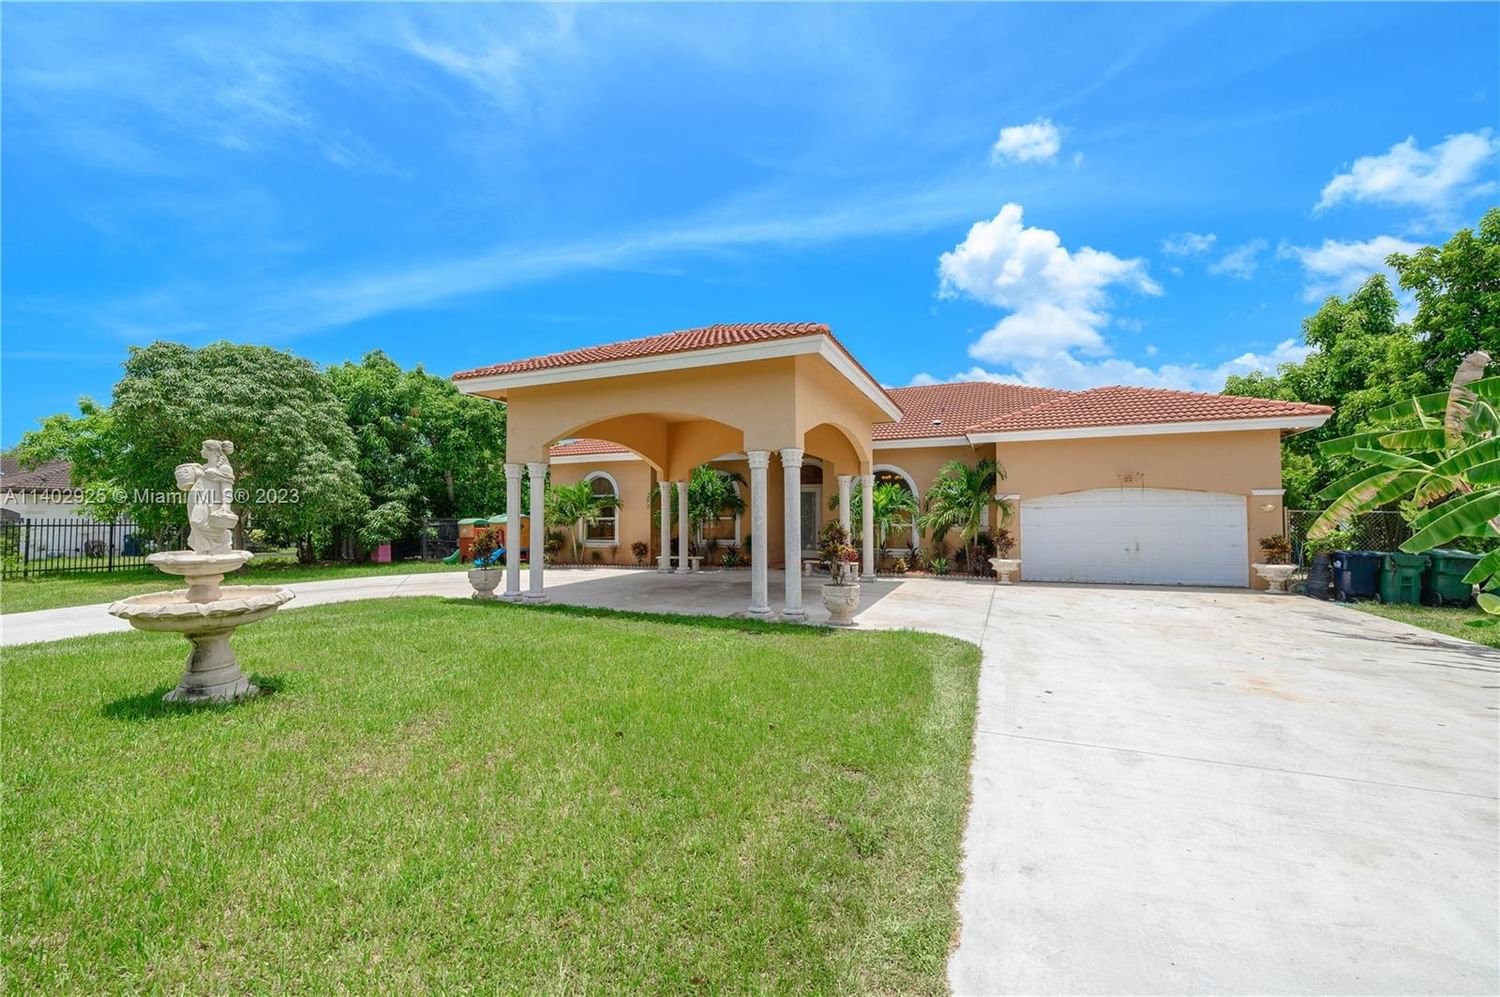 Real estate property located at 15492 274th St, Miami-Dade County, REDLAND ACRES AVOCADO HOM, Homestead, FL